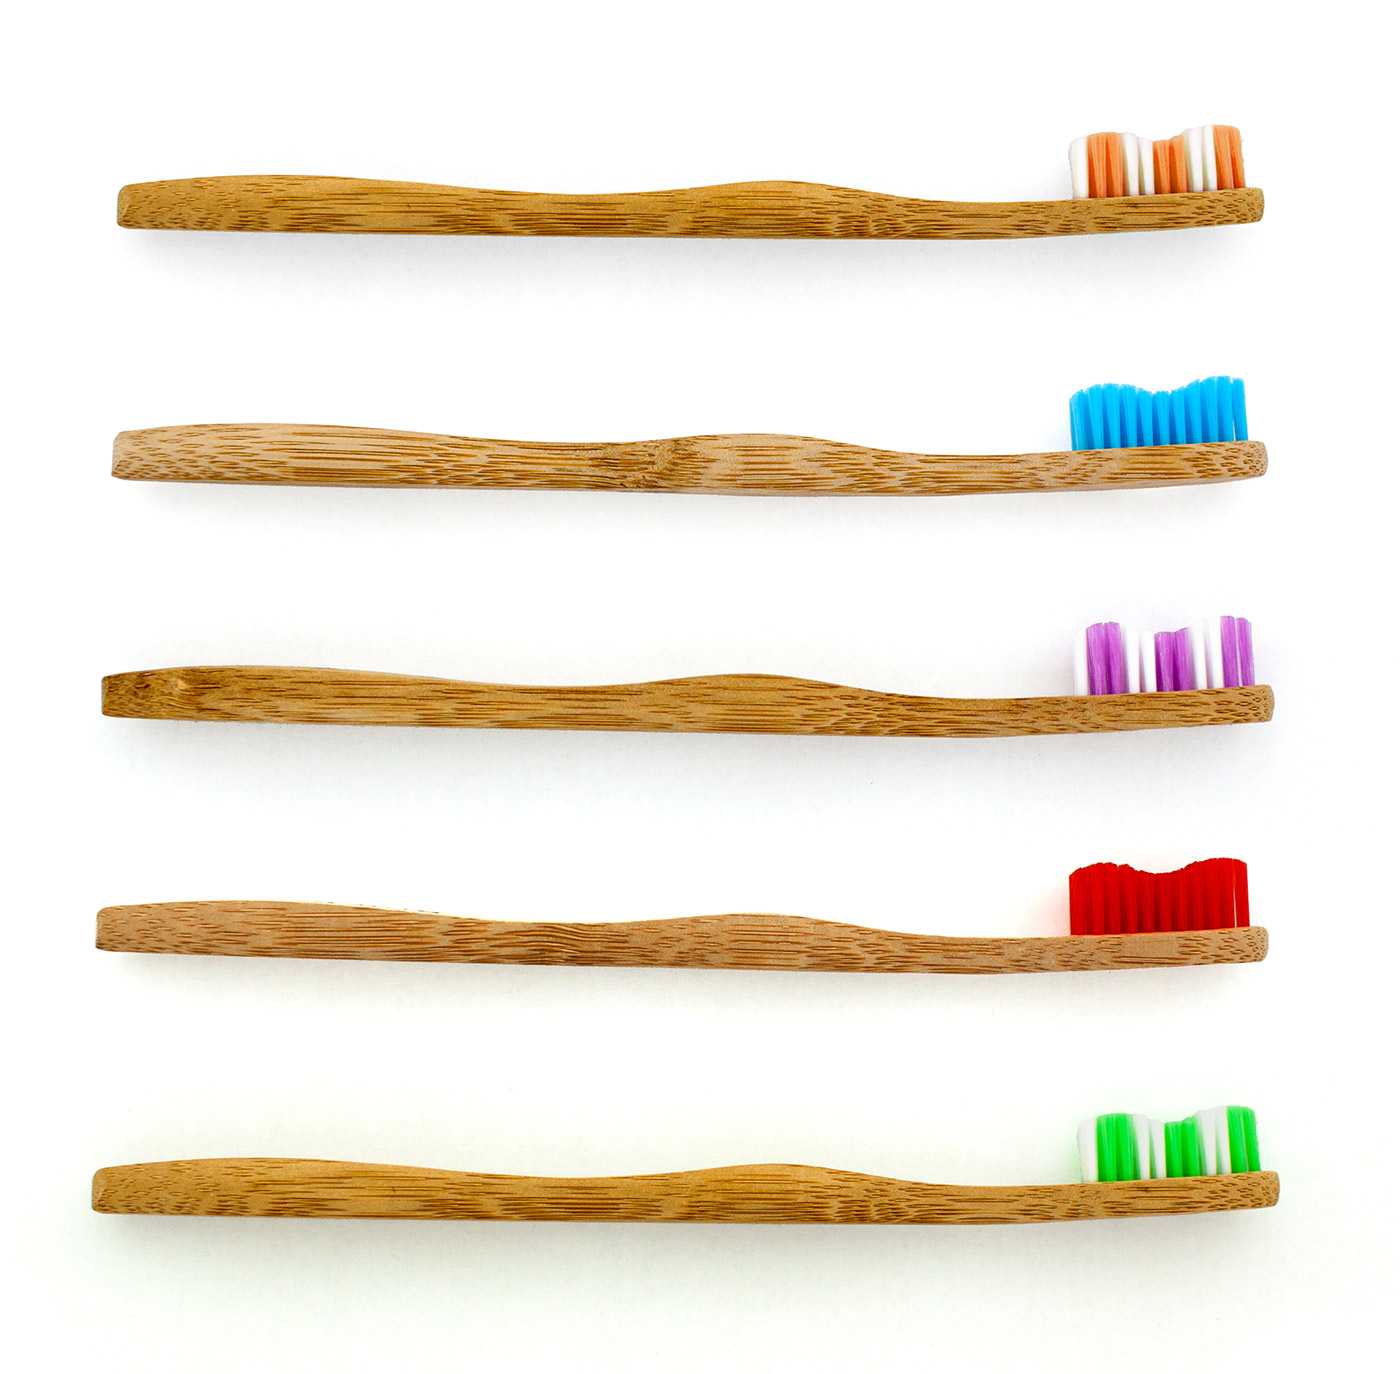 BlueRock bamboo toothbrushes